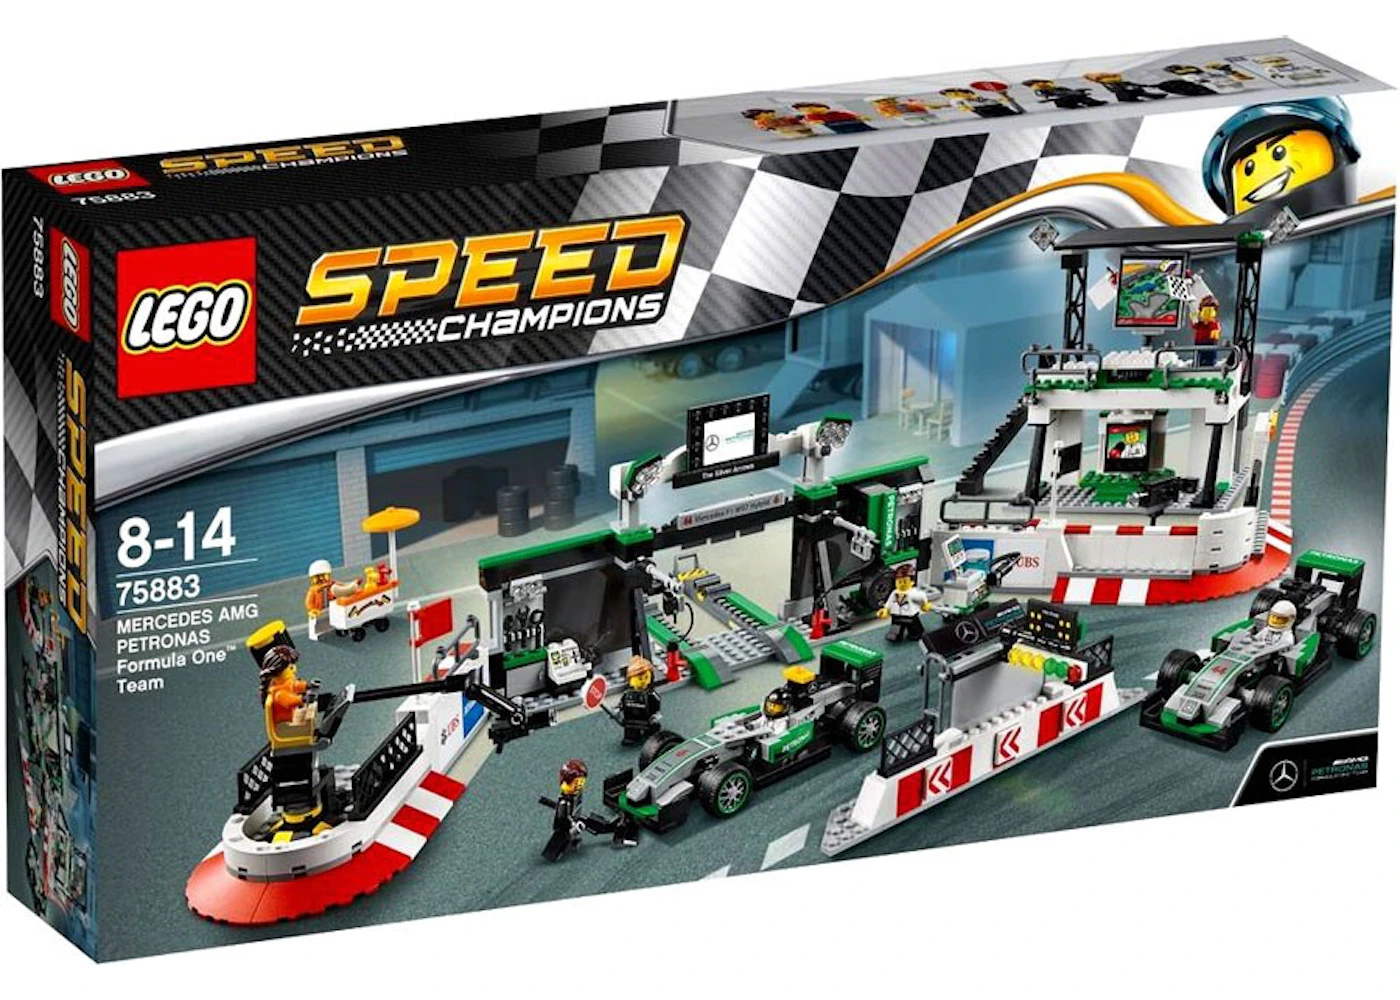 Australien Ru Hovedgade LEGO Speed Champions Mercedes AMG Petronas Formula One Team Set 75883 - US